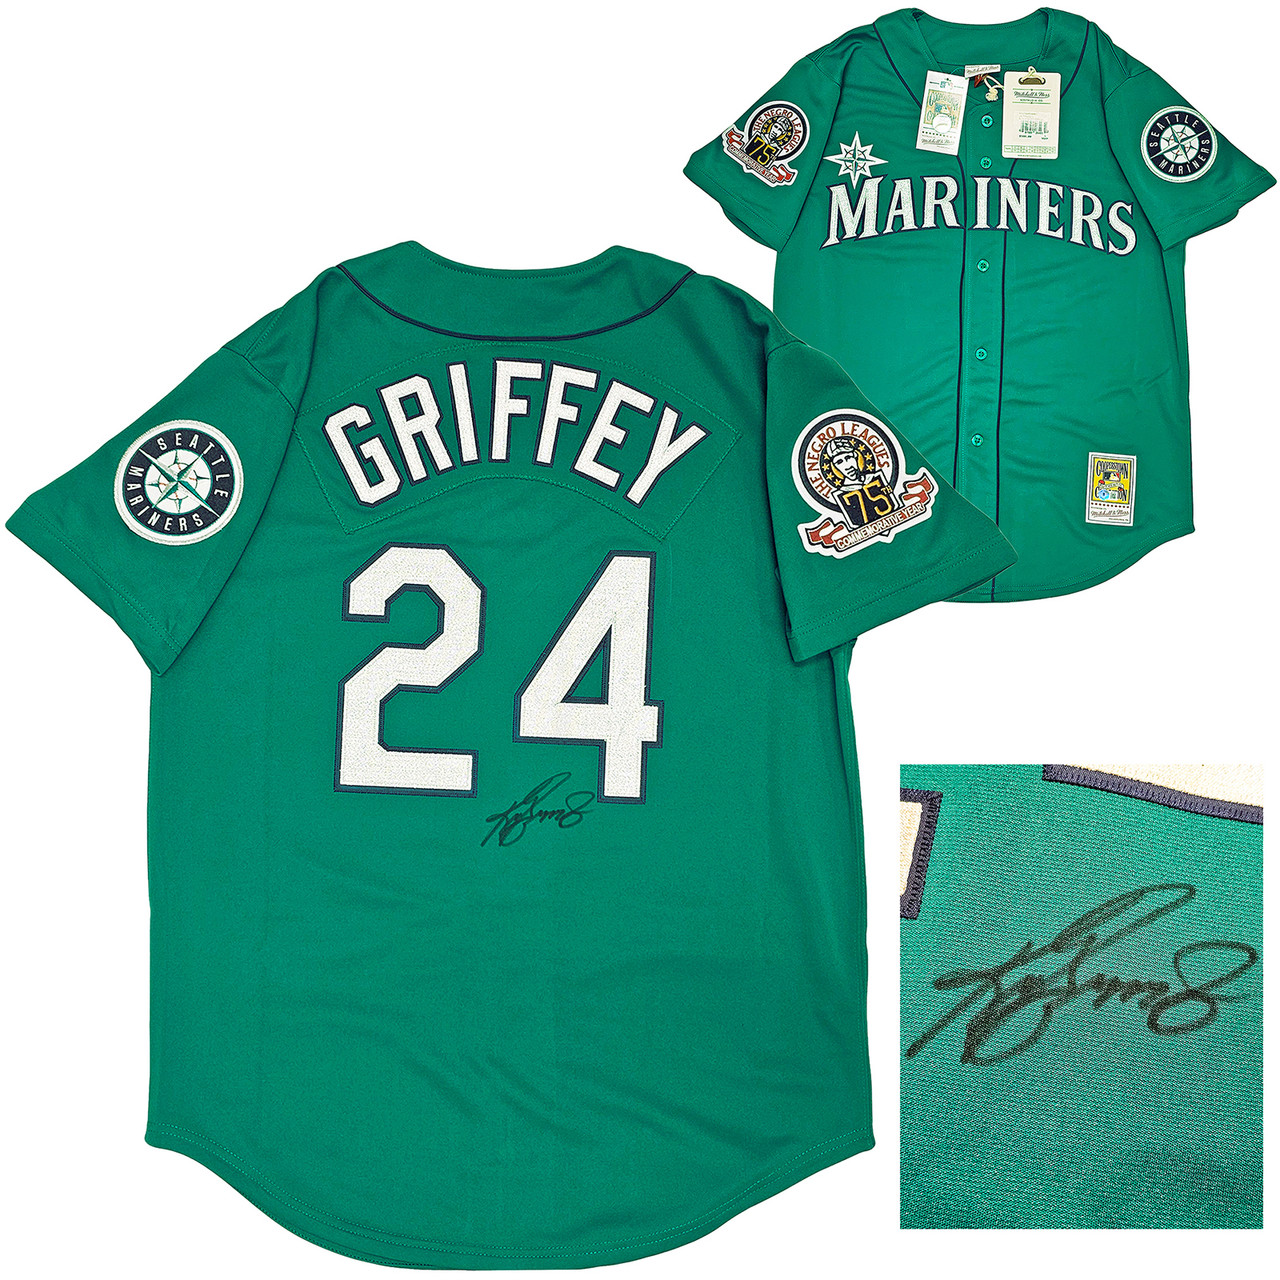 New Authentics  Griffey Jr. & Ichiro Mariners Jerseys